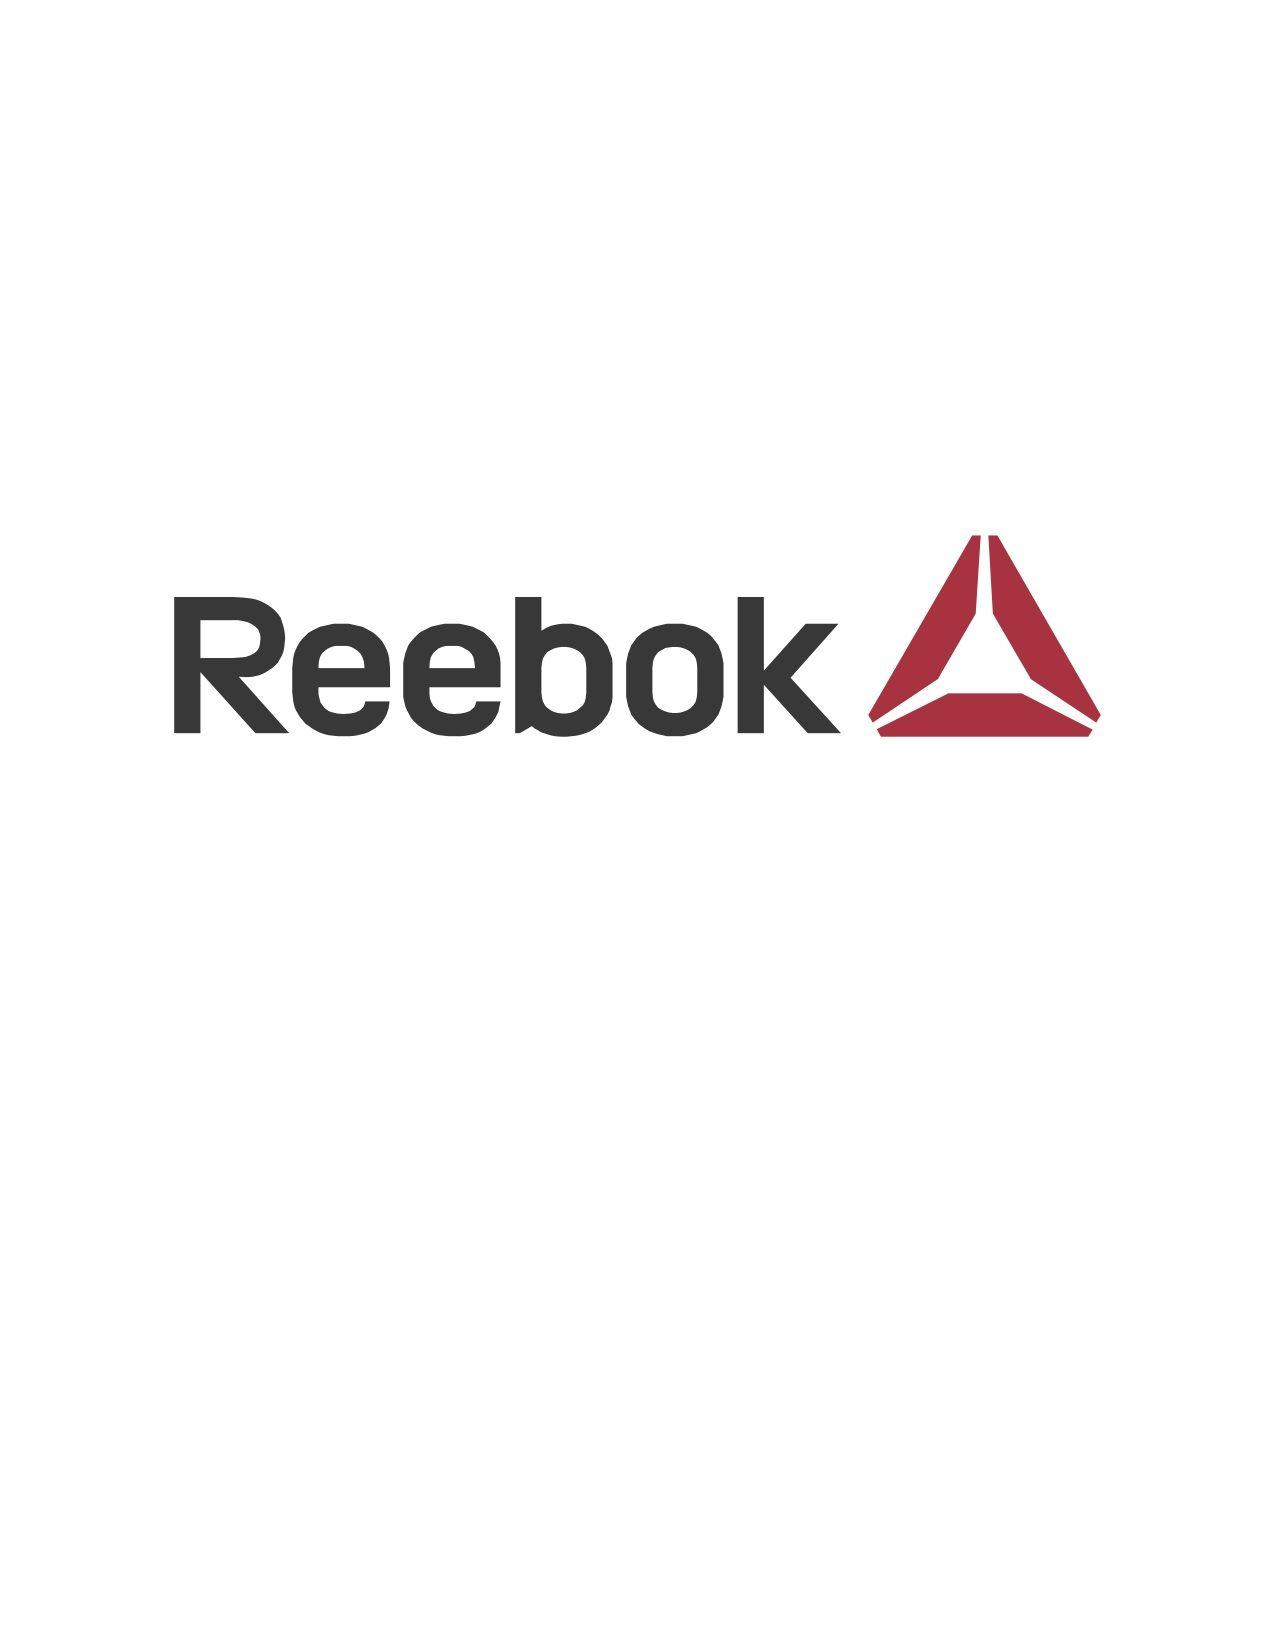 Reebok Wallpapers Top Free Reebok Backgrounds Wallpaperaccess